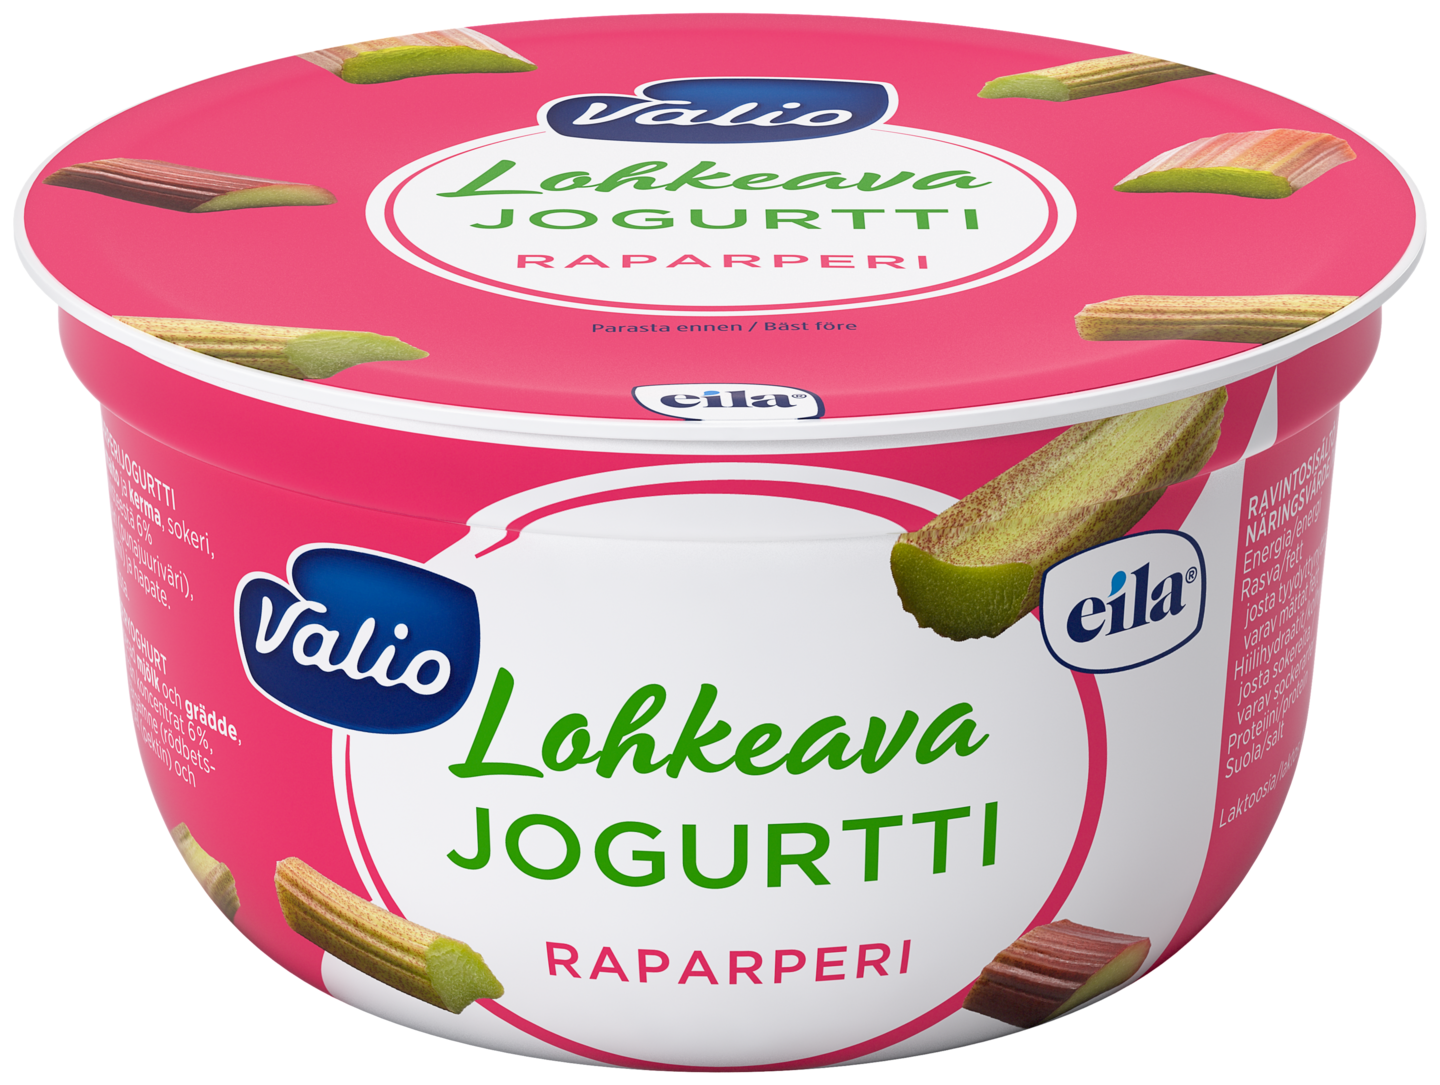 Valio lohkeava jogurtti 150g raparperi laktoositon